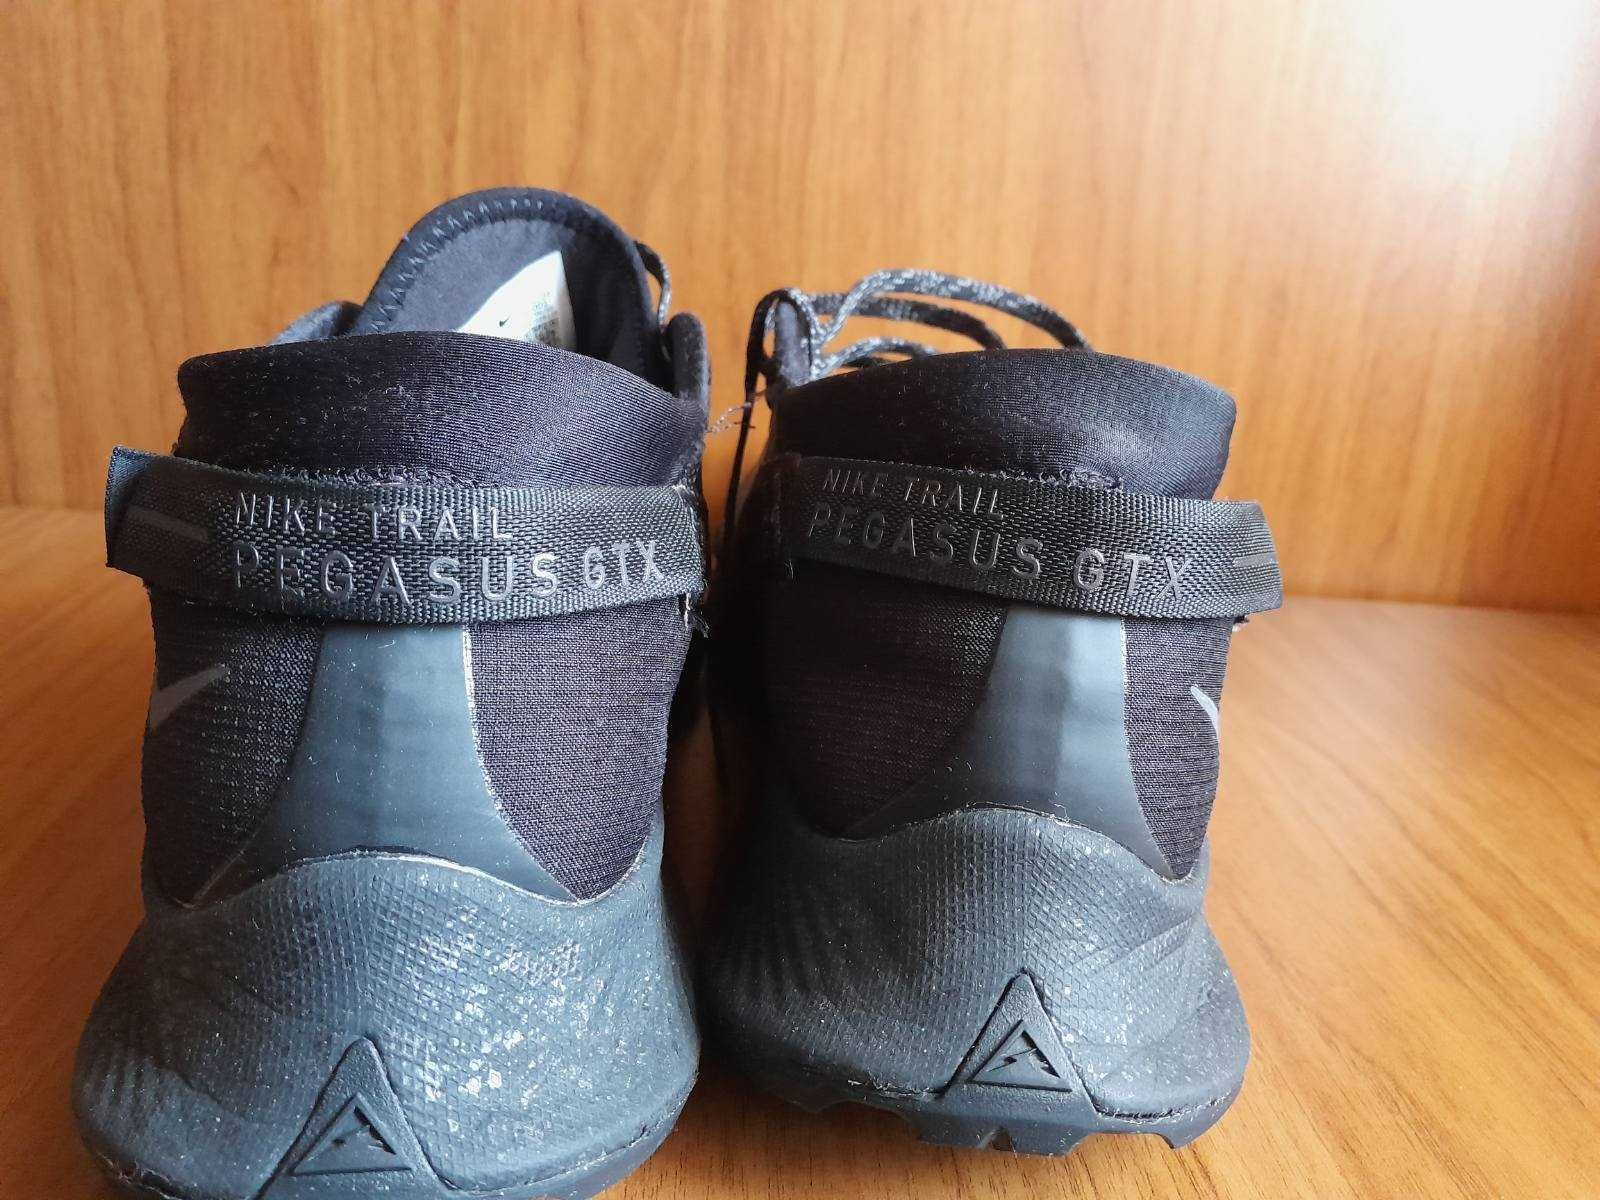 Nike trail pegasus gtx.gore-tex мембрана без следи от употреба-180лв